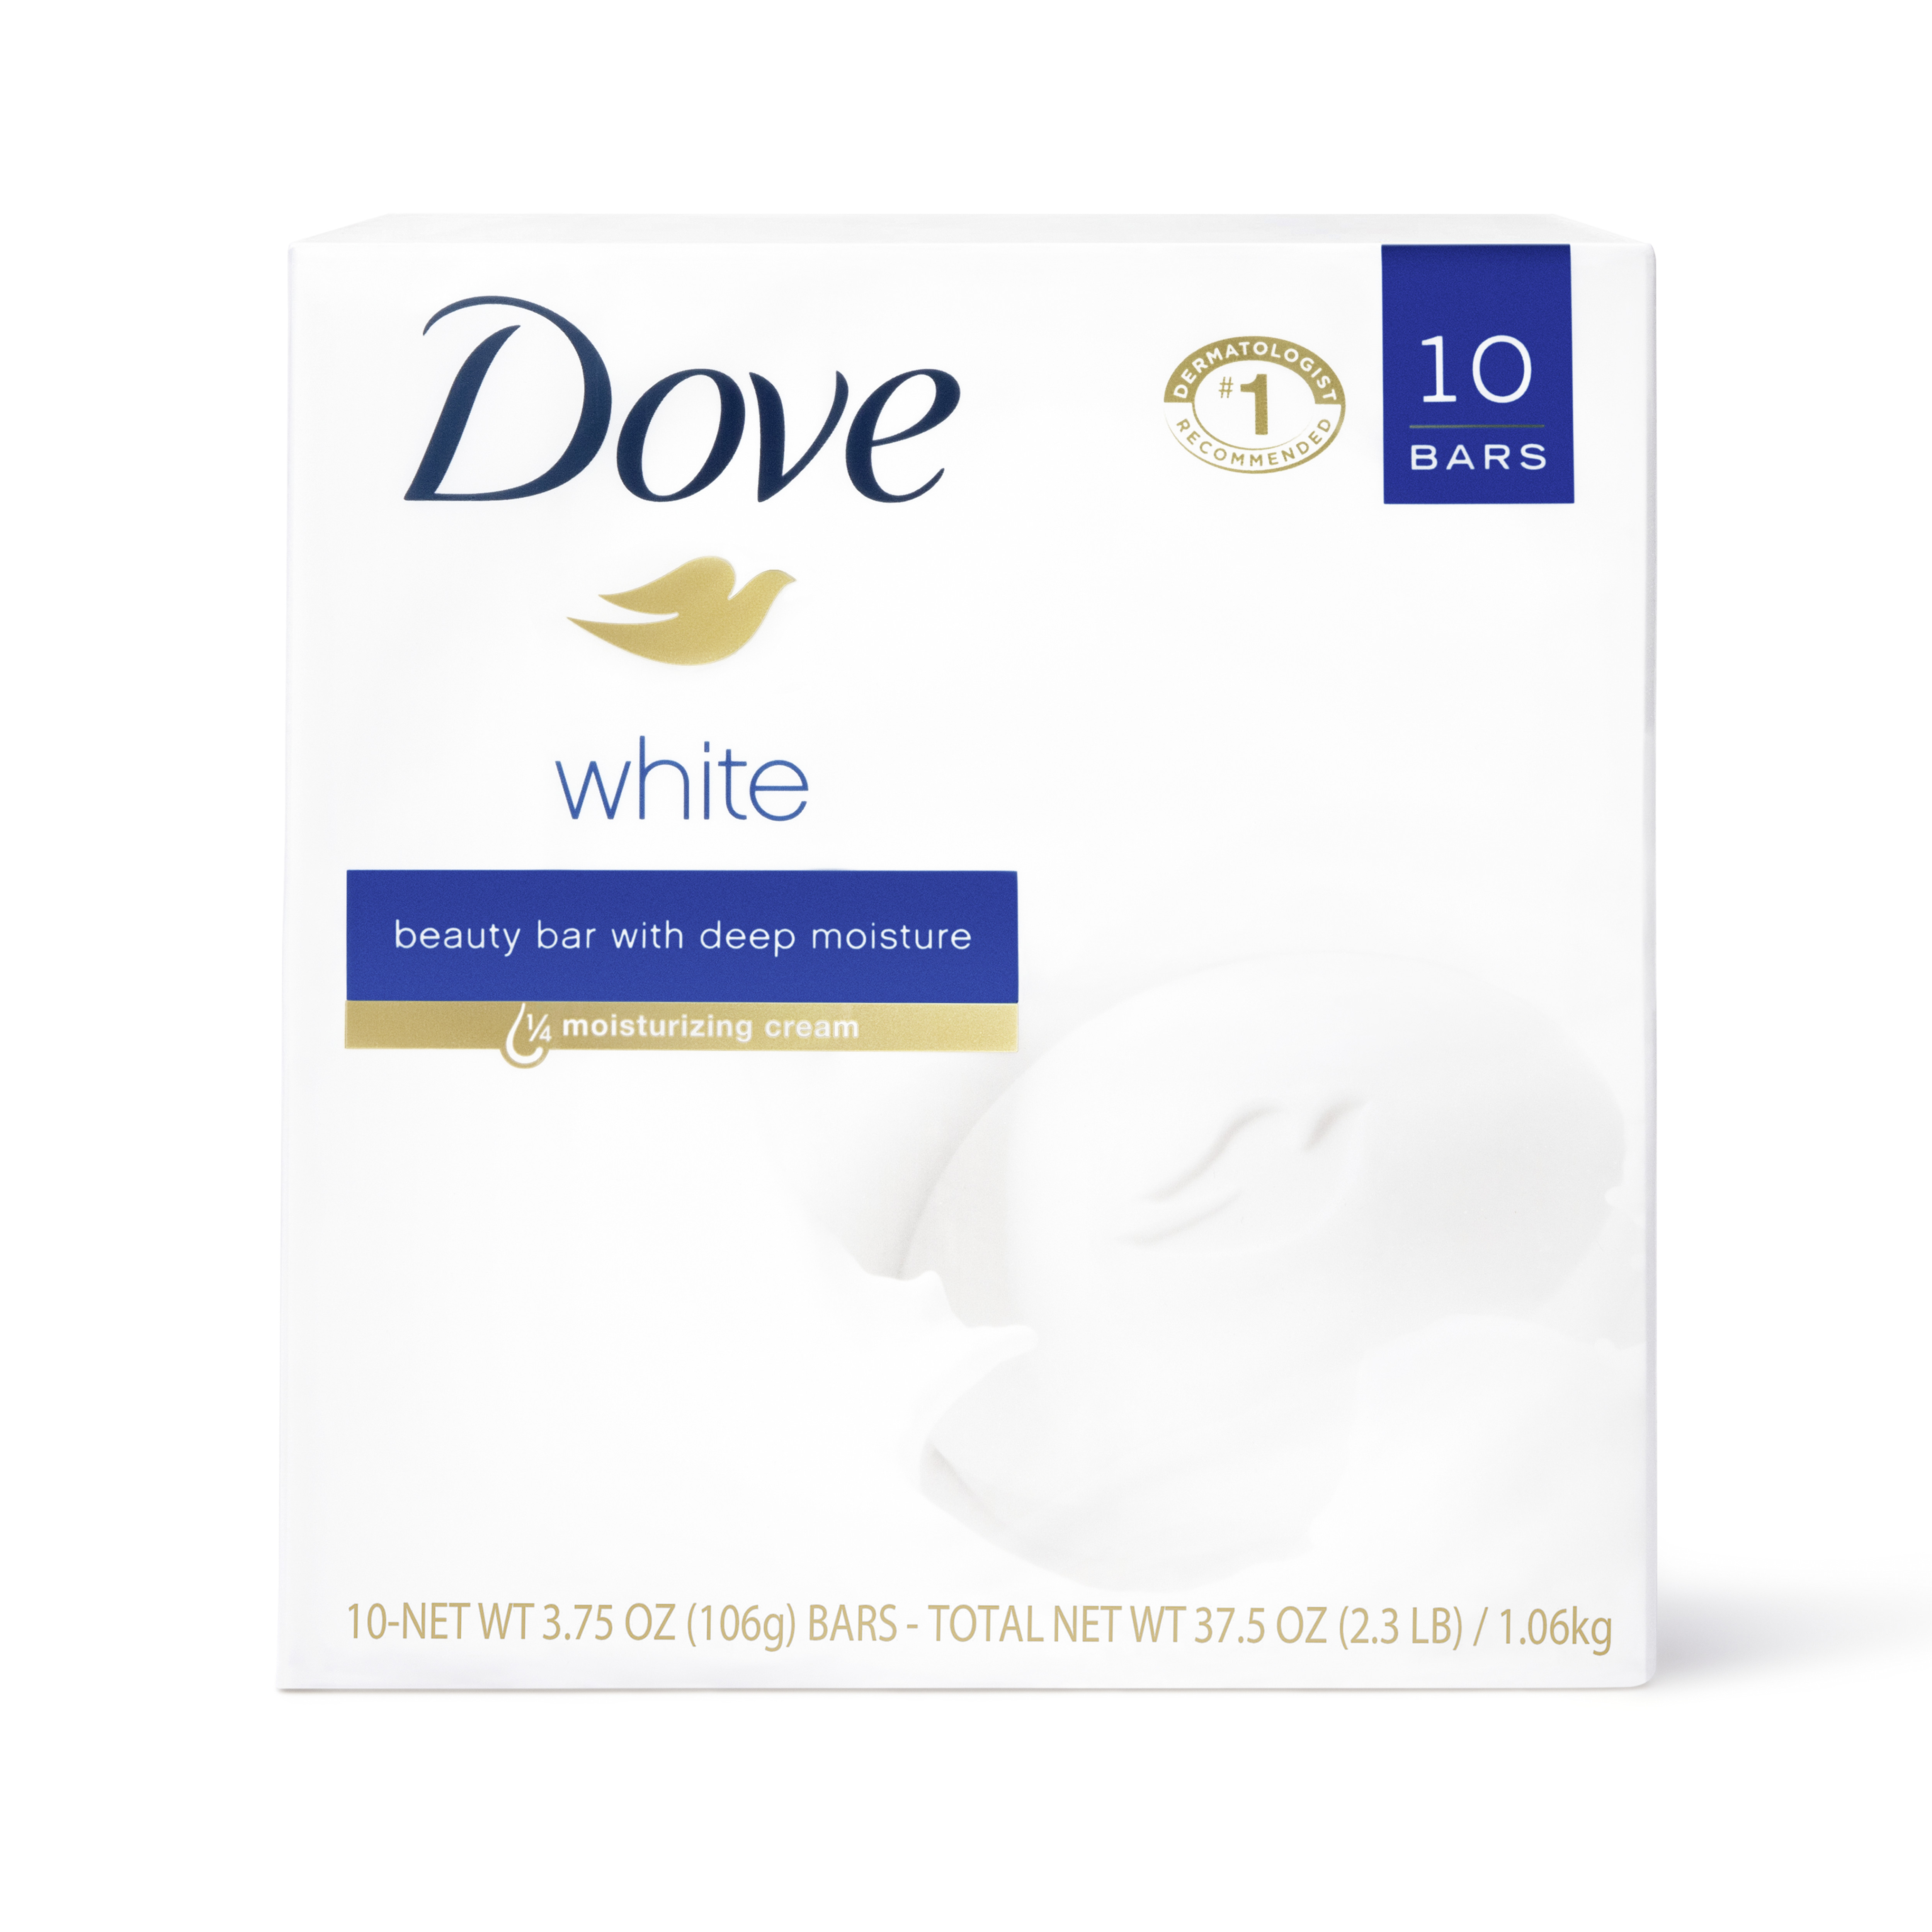 Dove Beauty Bar White 3.75 oz 10 Bars - image 1 of 9